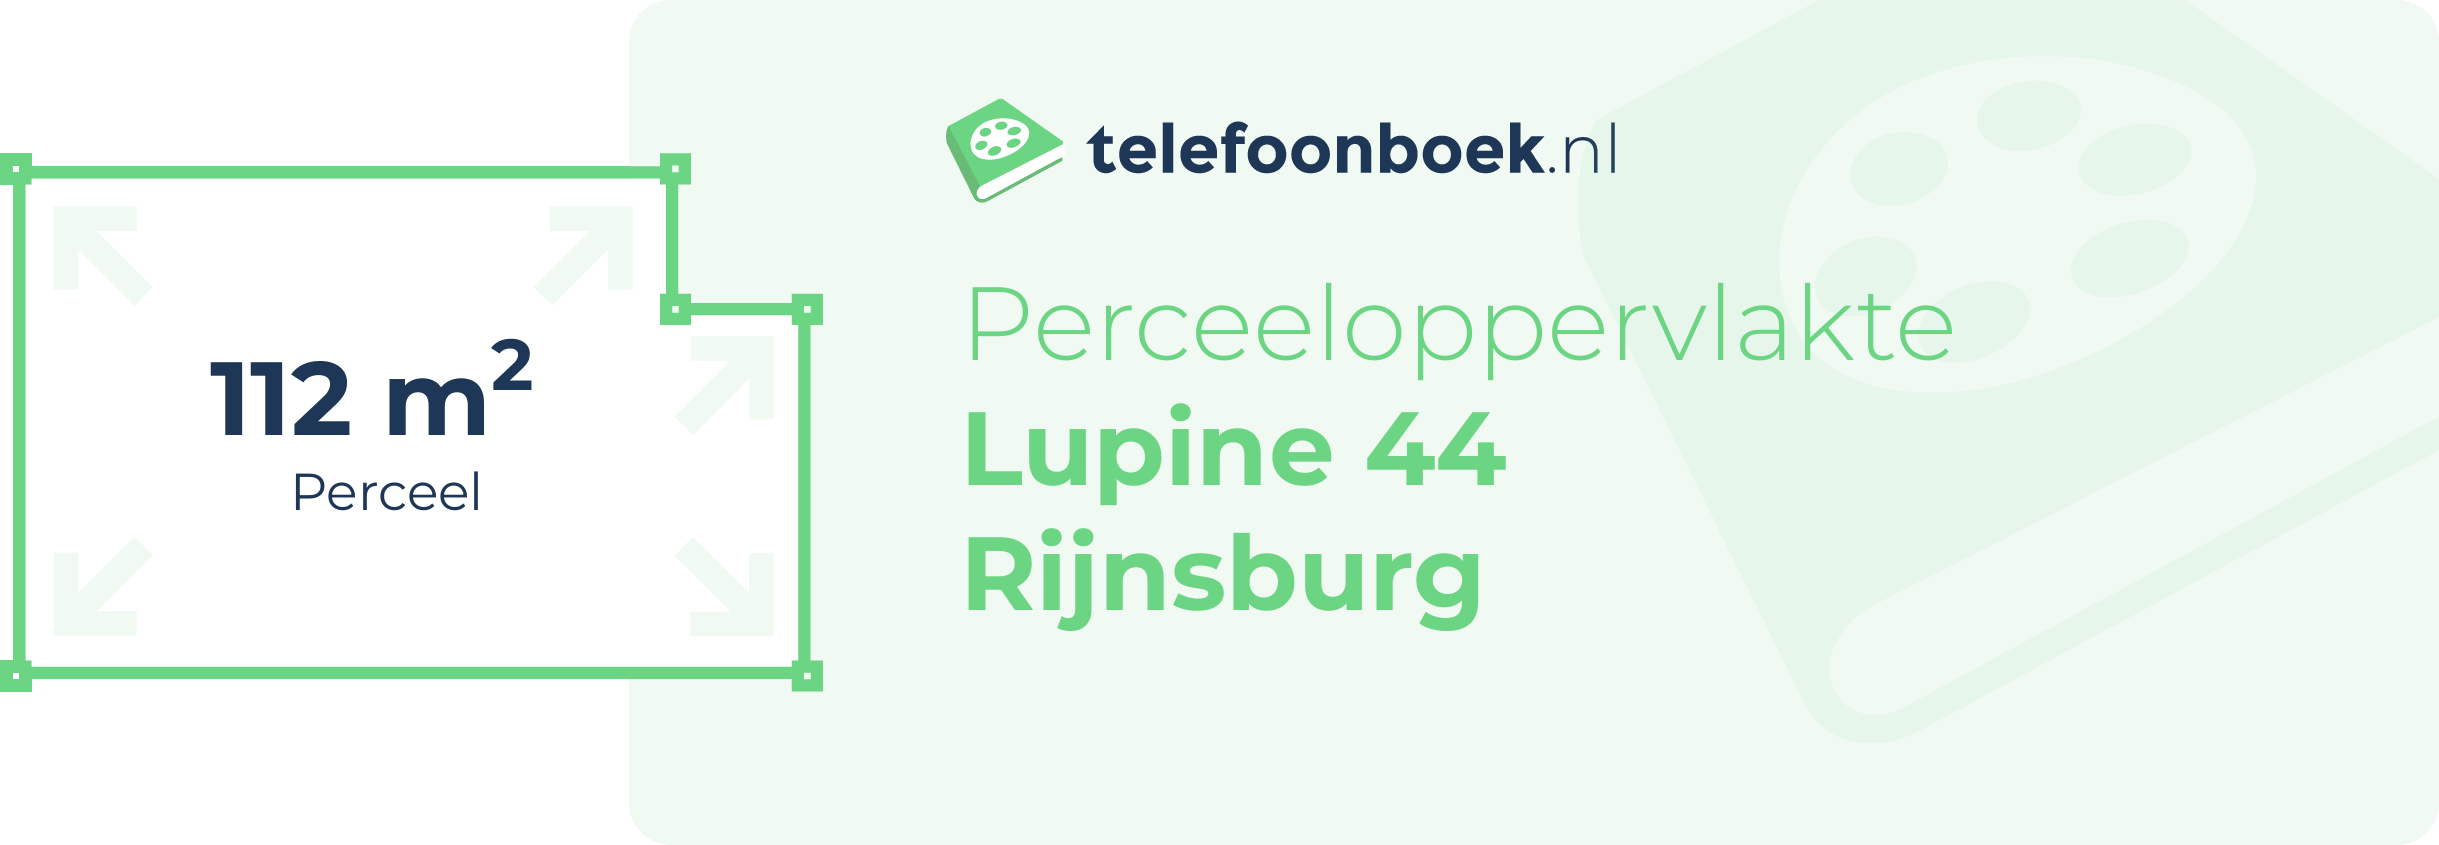 Perceeloppervlakte Lupine 44 Rijnsburg